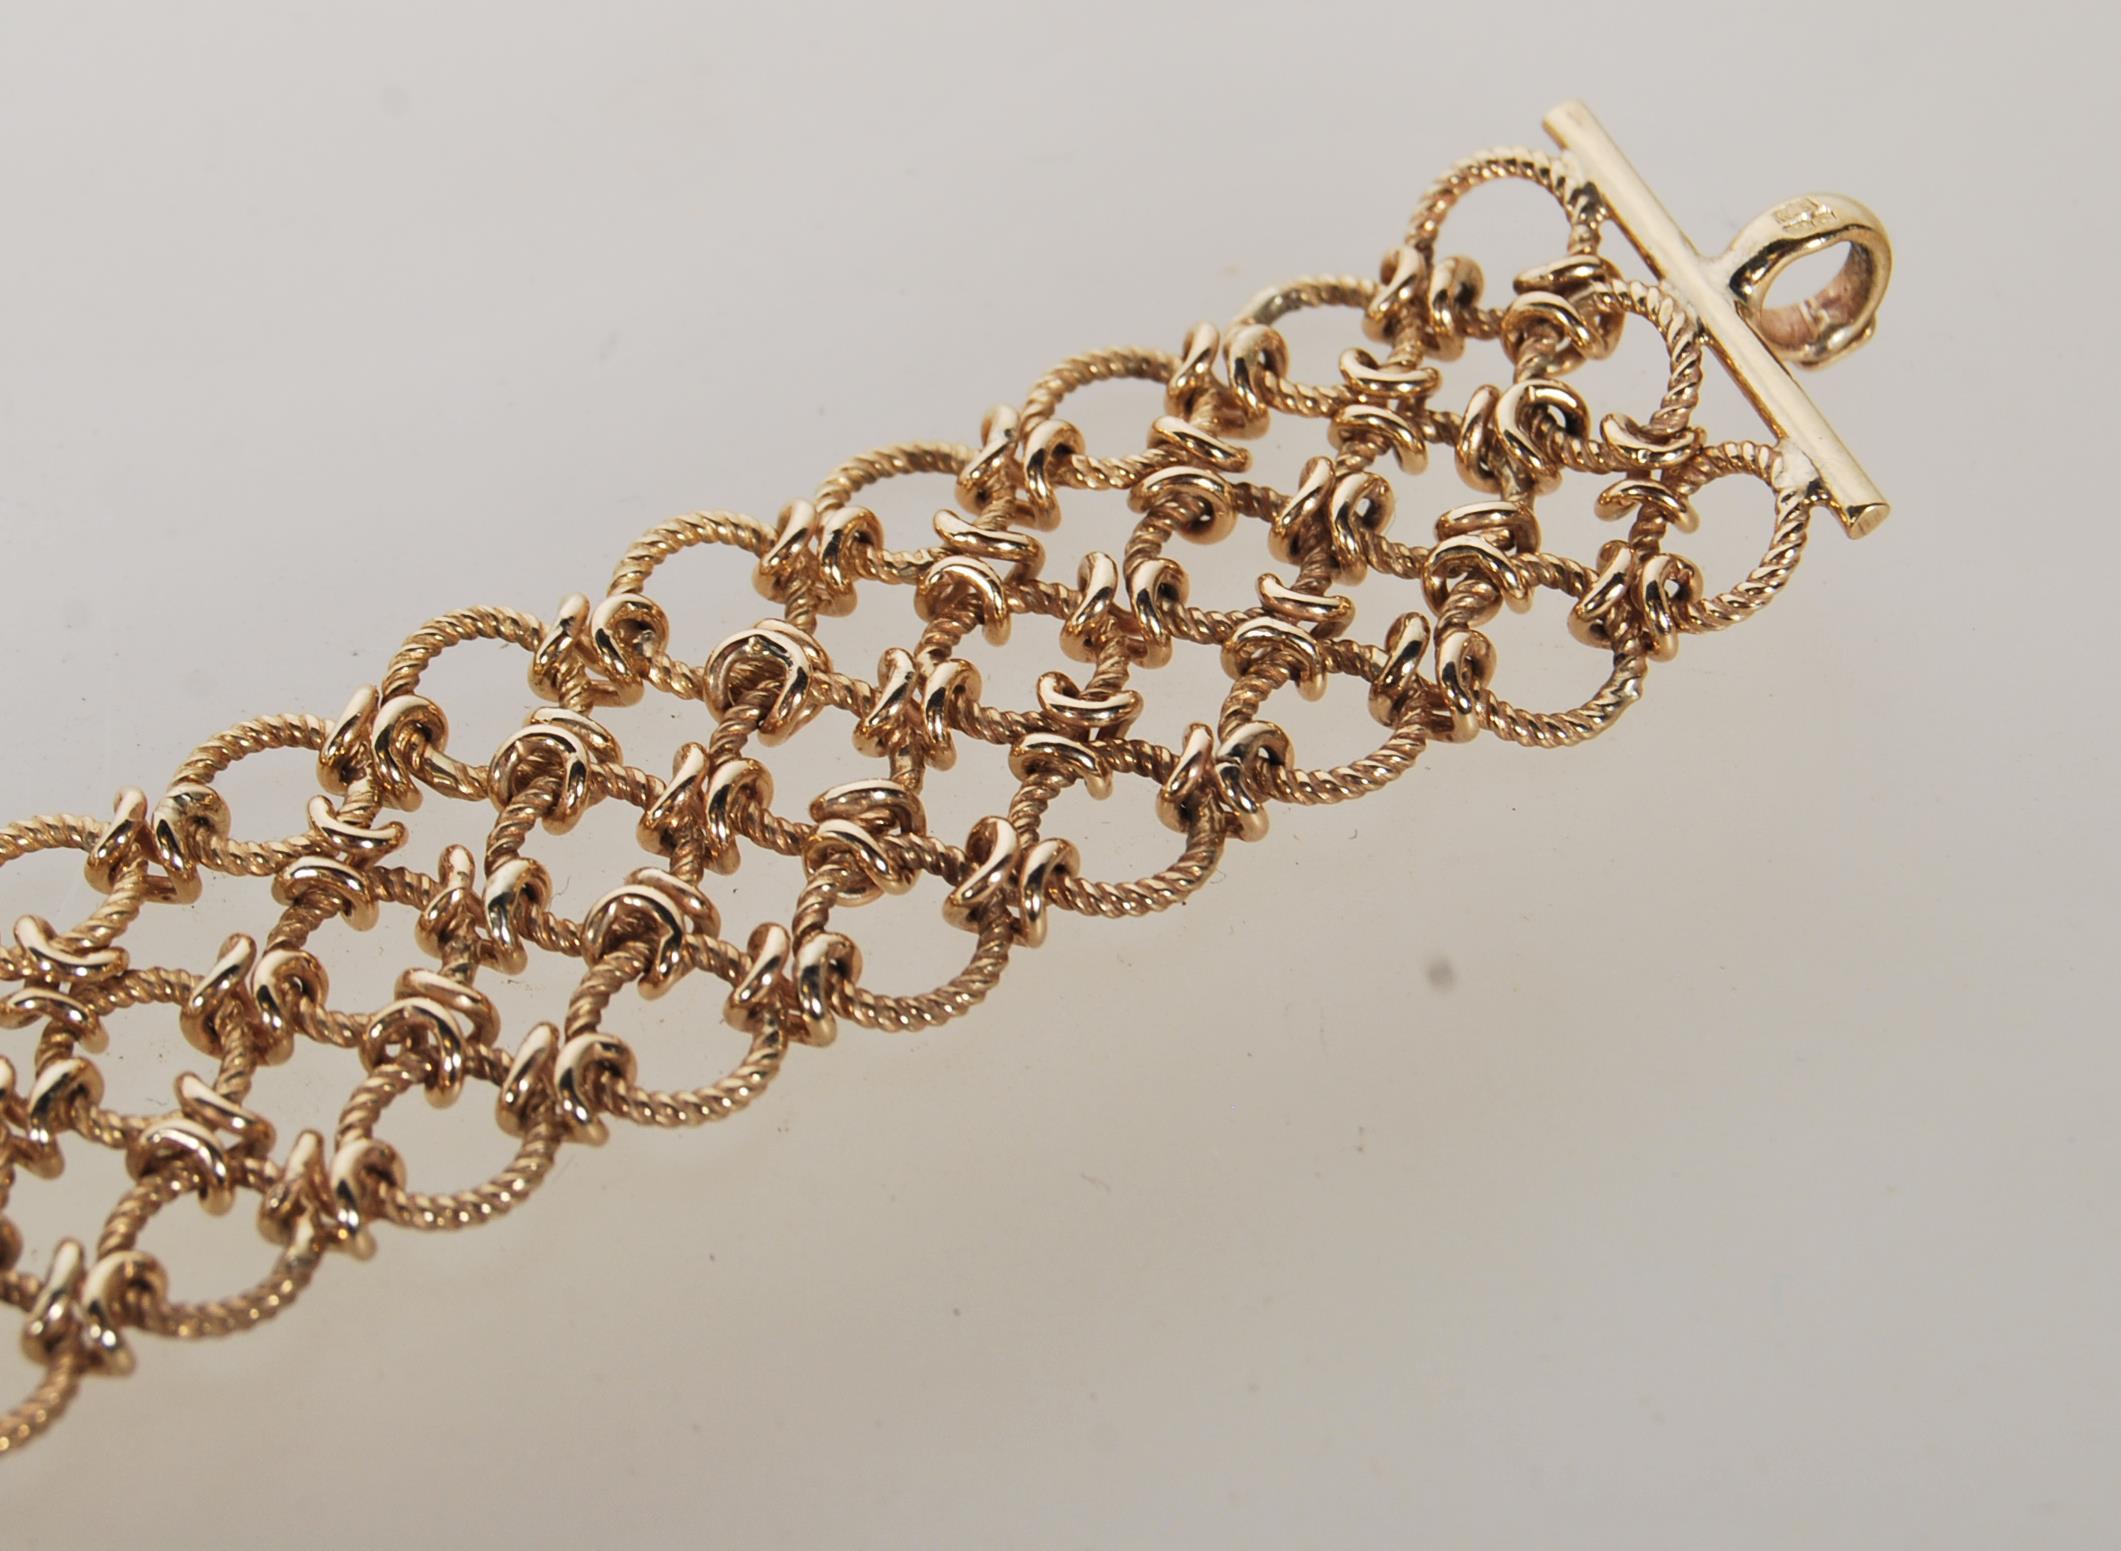 A hallmarked 9ct gold ladies three strand bracelet chain having three rows of rope twist hopps - Image 3 of 5